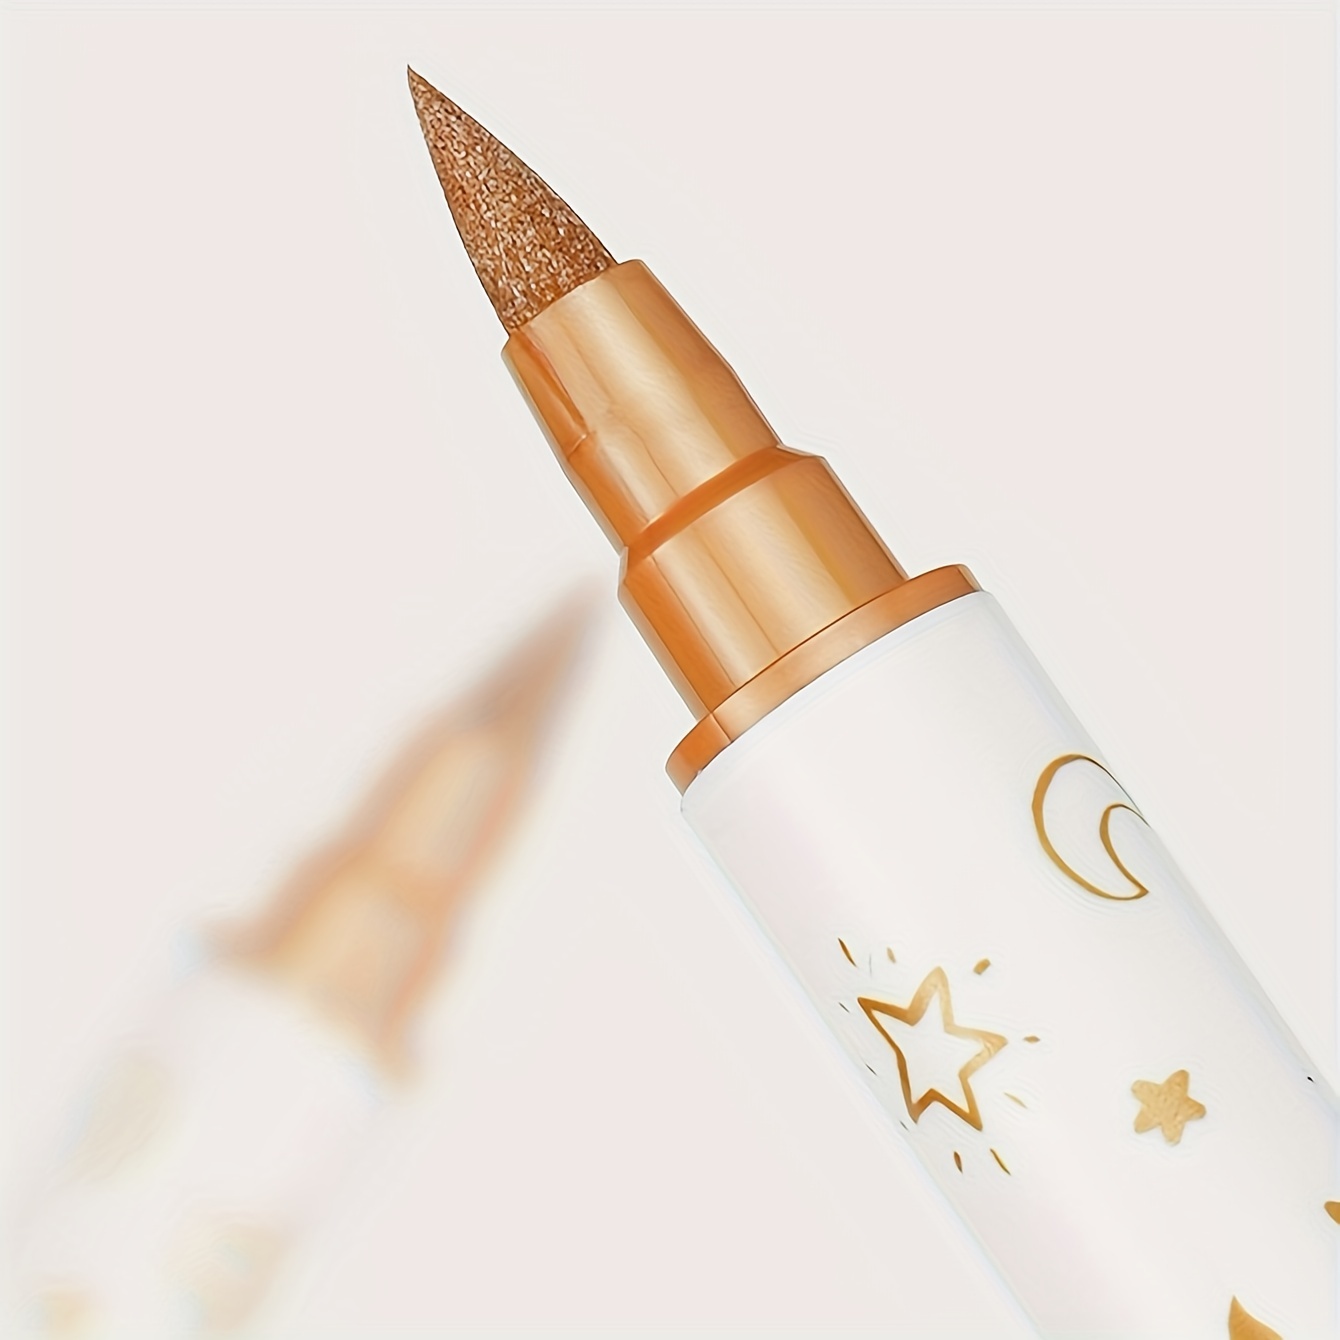 10pcs Metallic Glitter Marker Pens Dual Tip Brush And Fine Point Pens For  DIY Album, Black Cards, Scrapbooking, Craft Supplies, On Ceramic, Stone, Gla